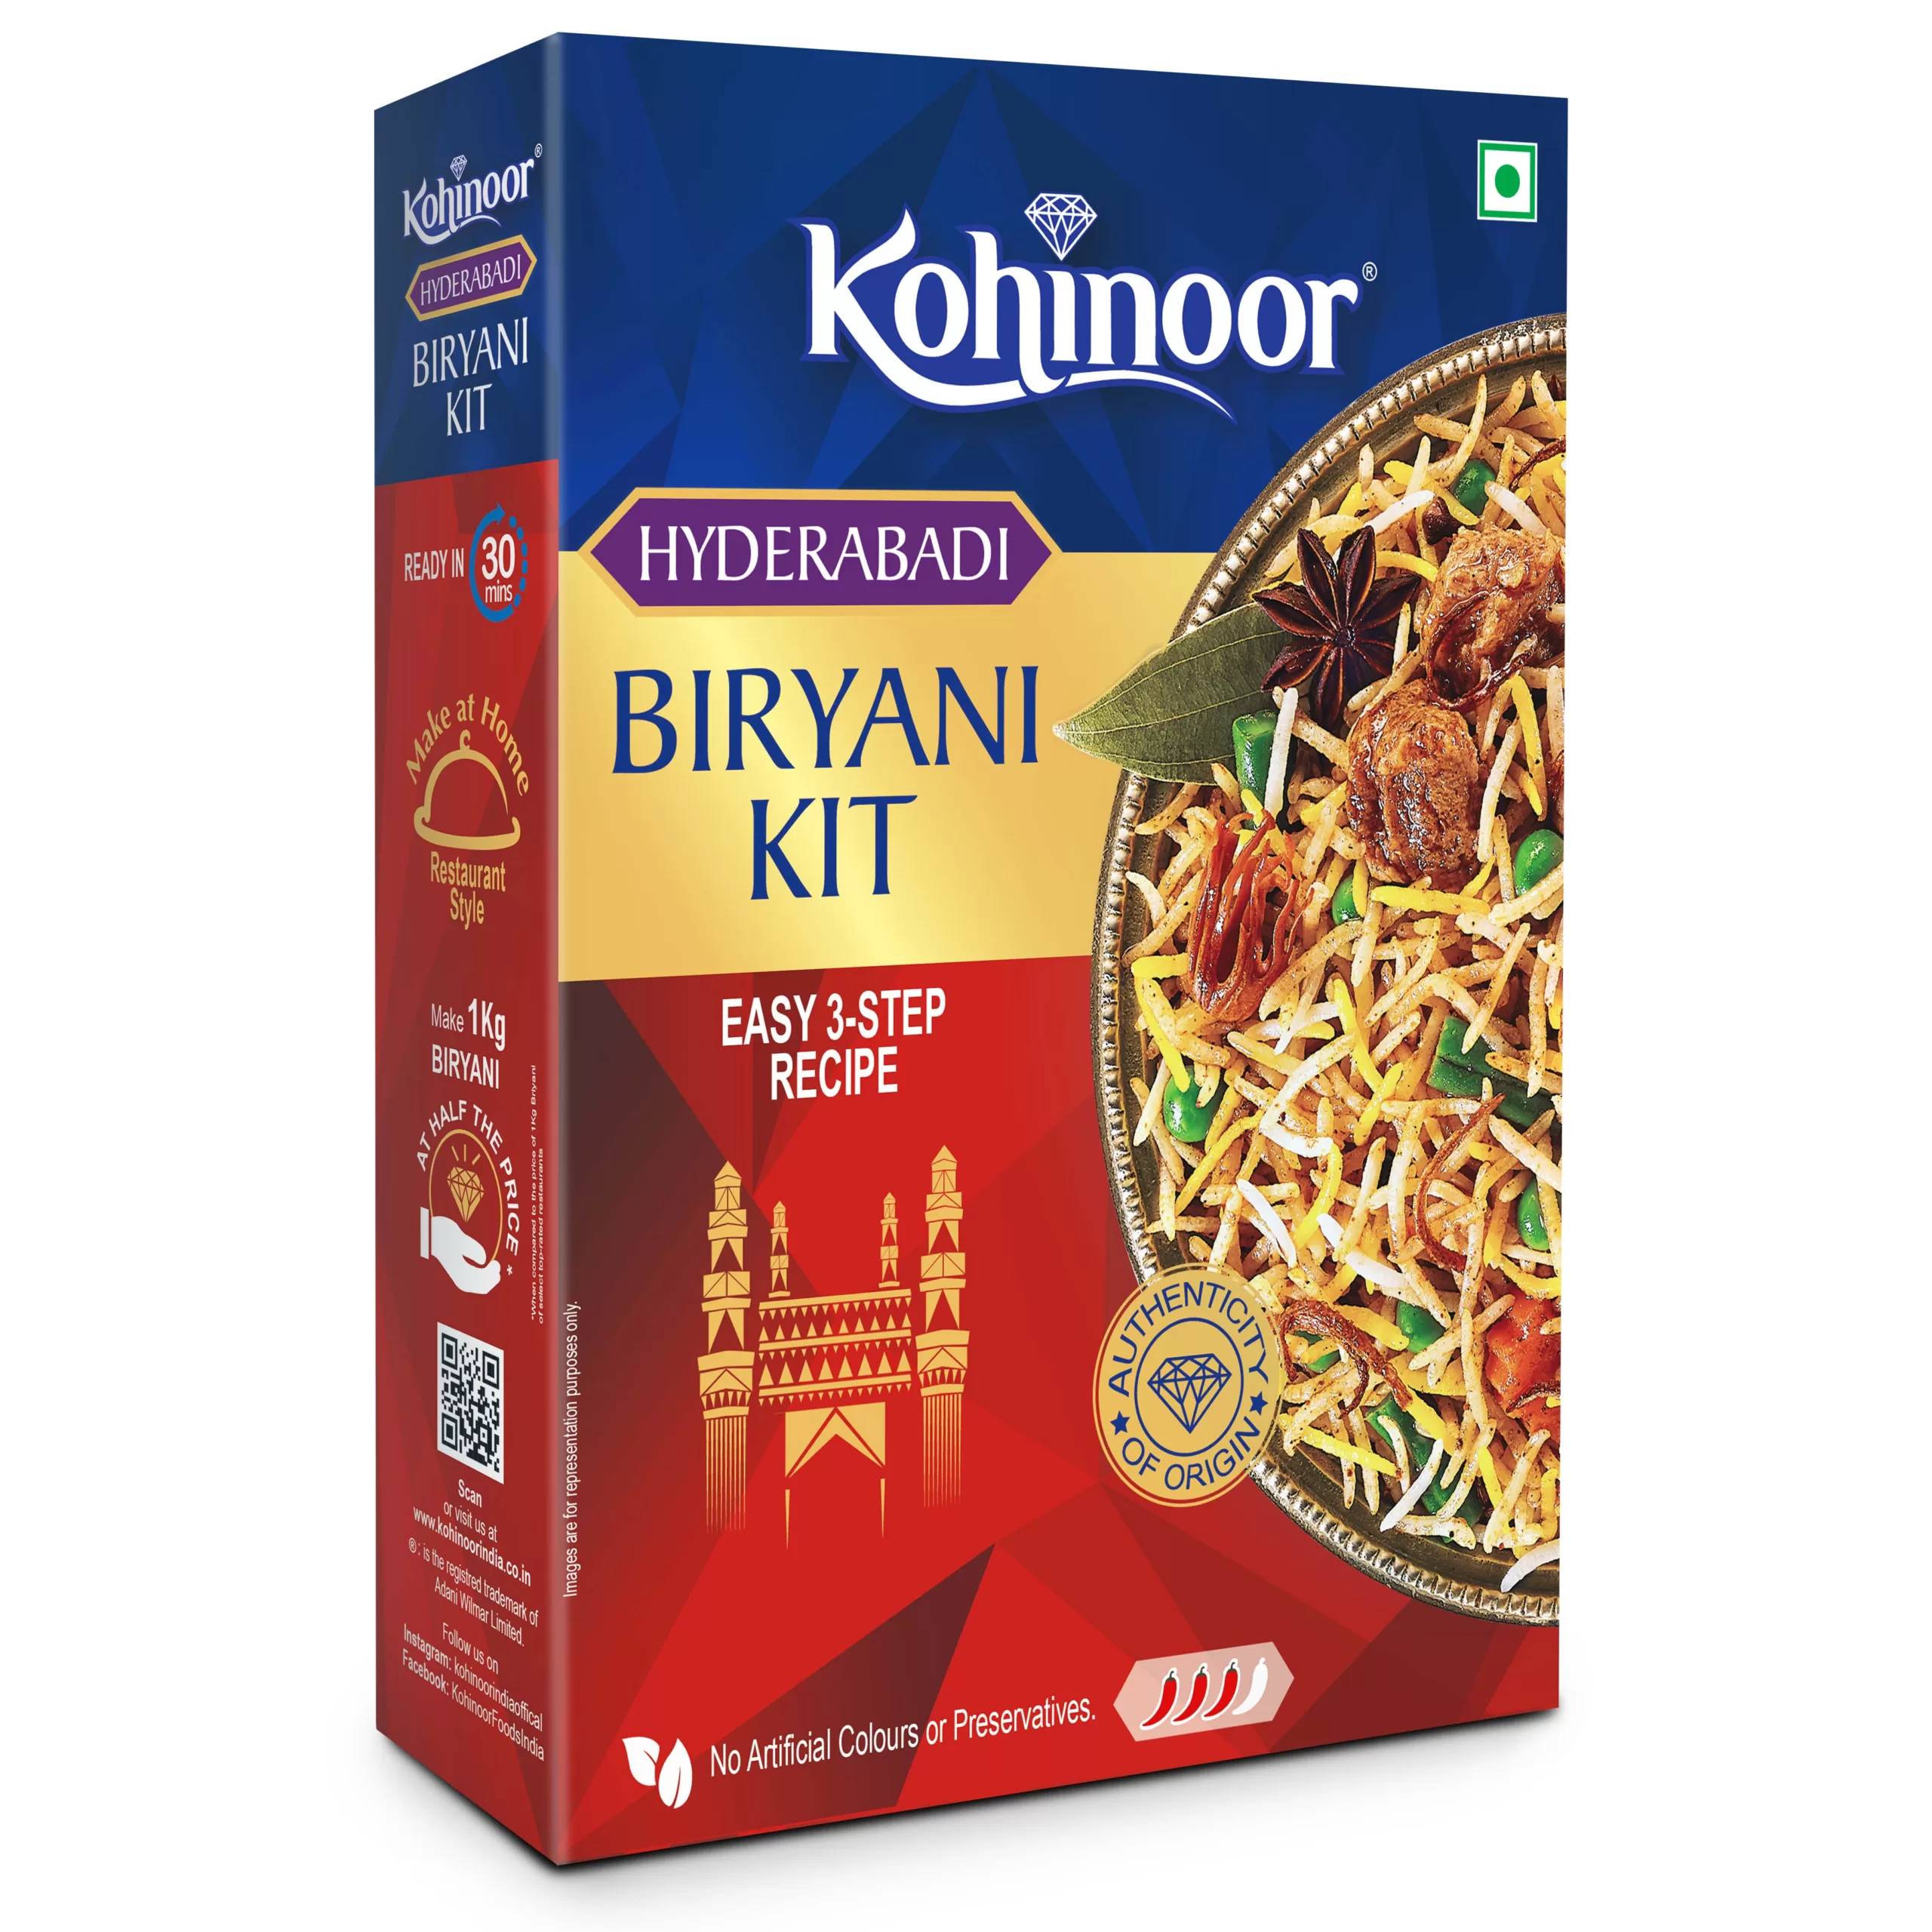 Adani Wilmar launches Kohinoor Biryani Kit that helps in preparing authentic biryani in 30-minutes